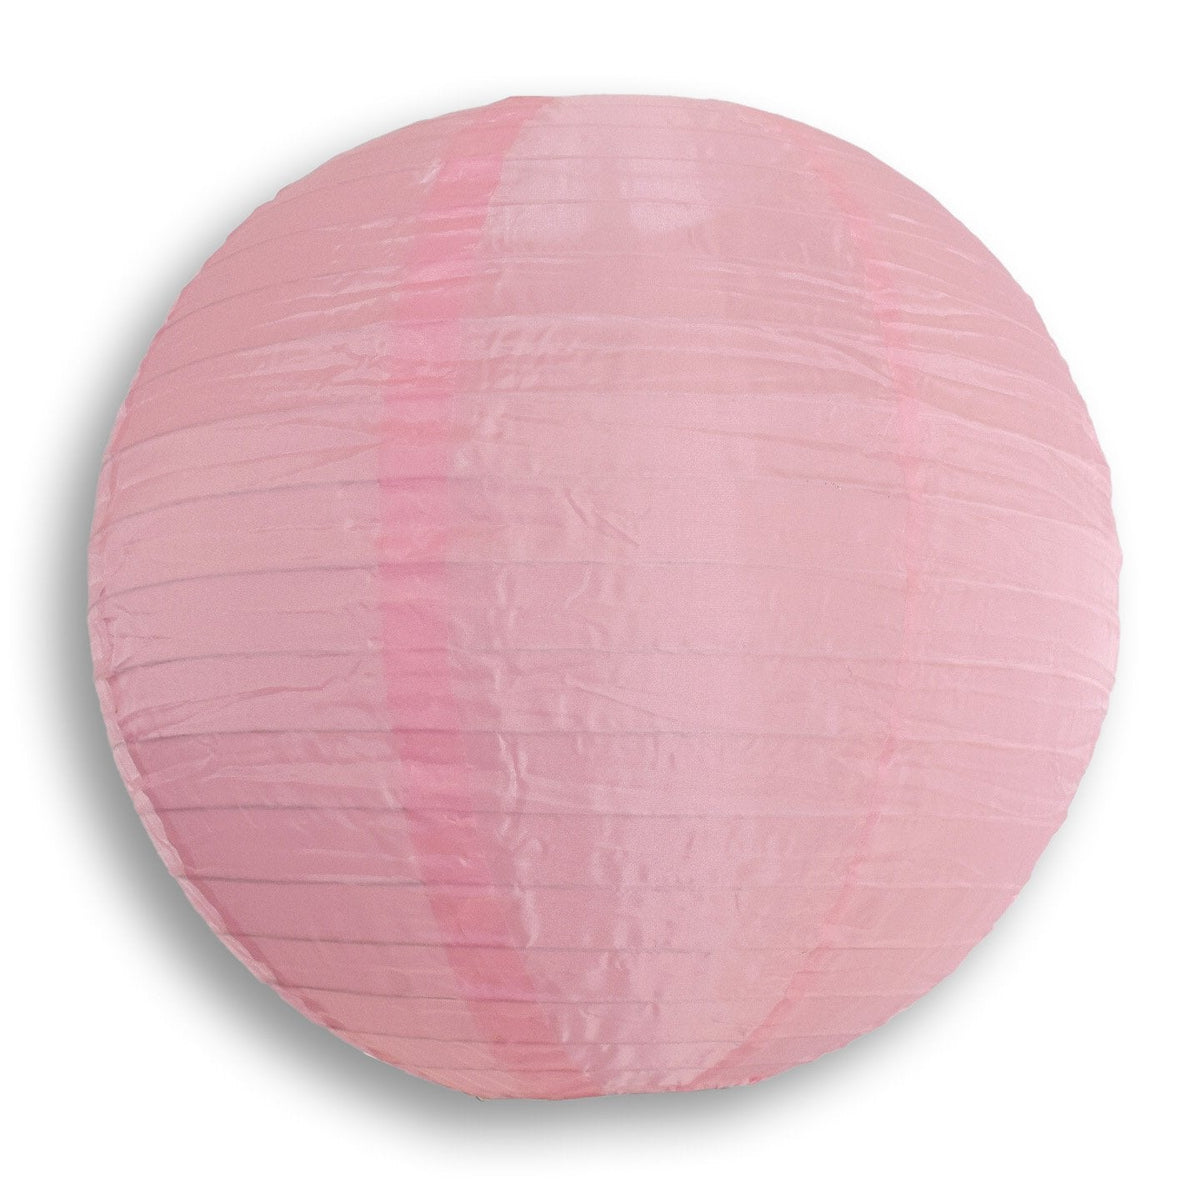 36&quot; Pink Jumbo Shimmering Nylon Lantern, Even Ribbing, Durable, Dry Outdoor Hanging Decoration